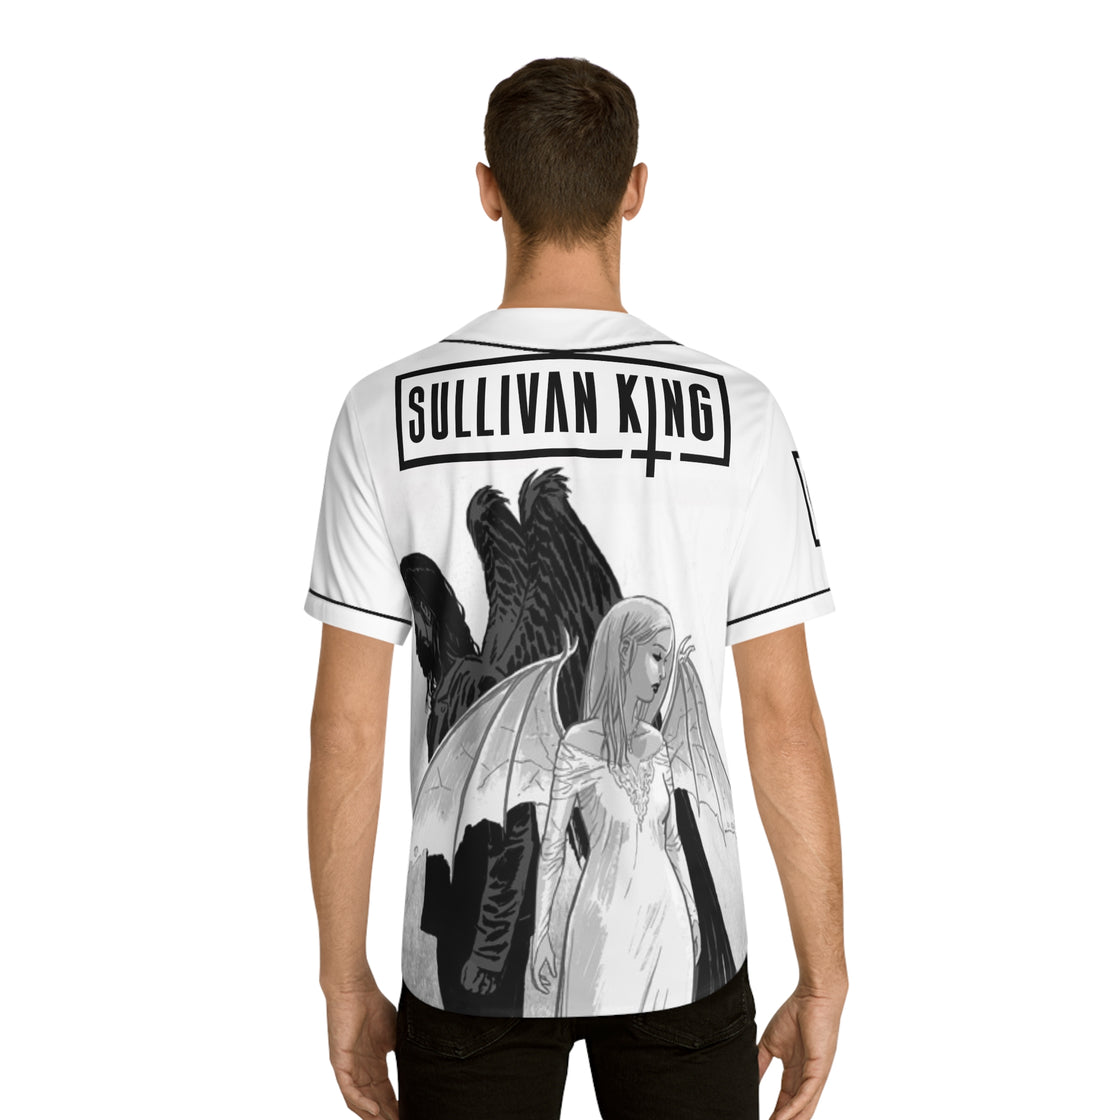 Sullivan King Jersey (Black & White)